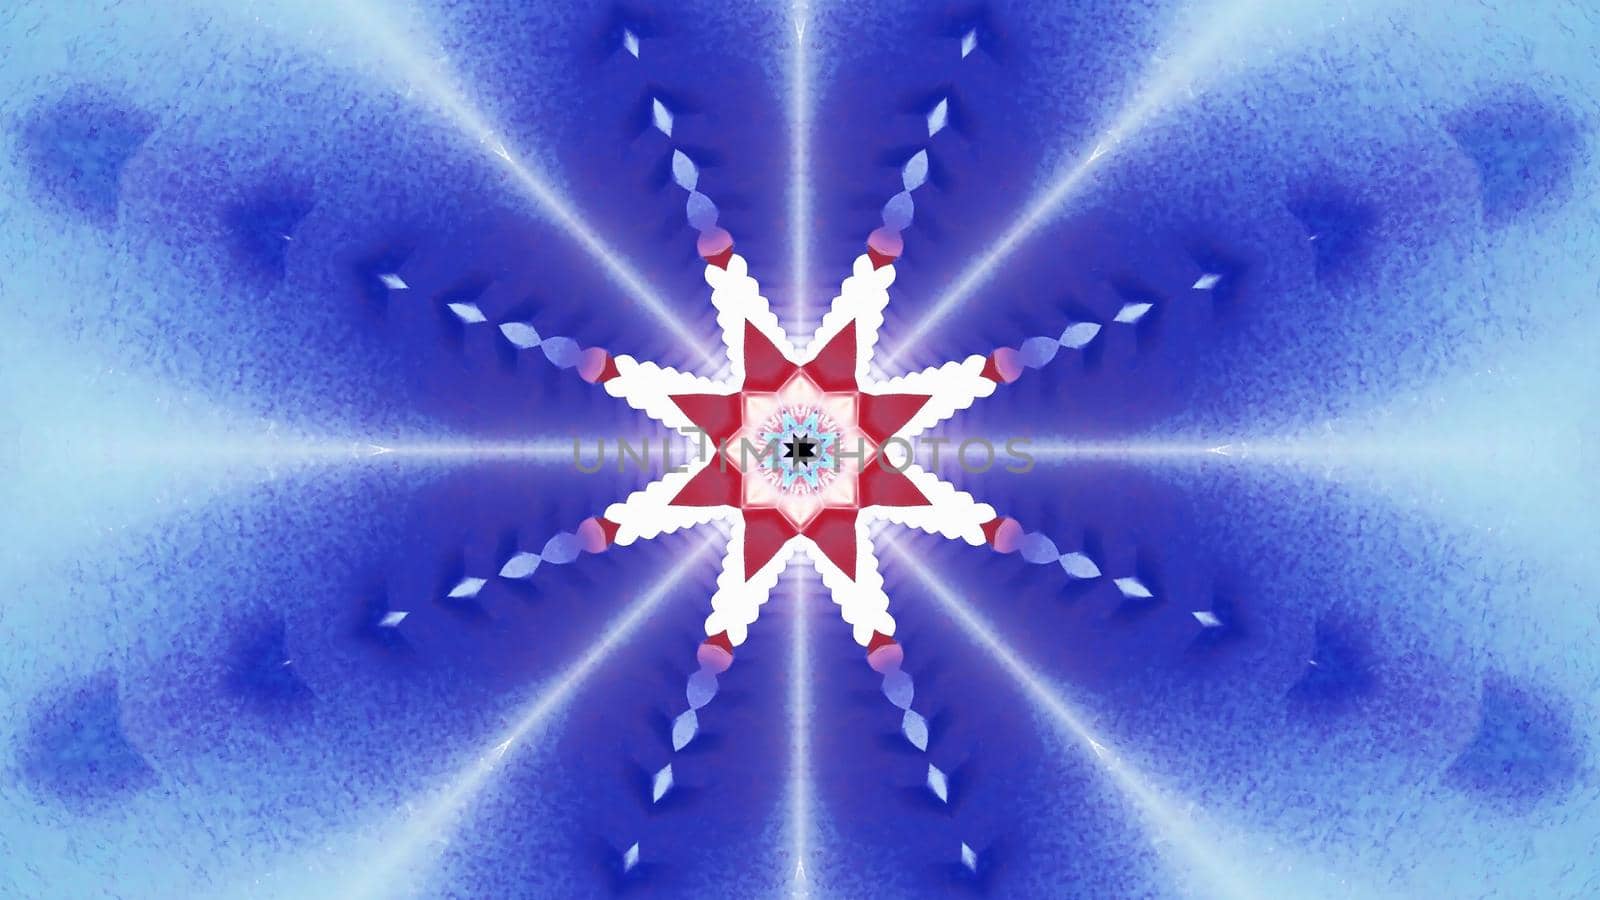 4K UHD 3D illustration of vivid star shaped ornament shimmering with neon light on blue background